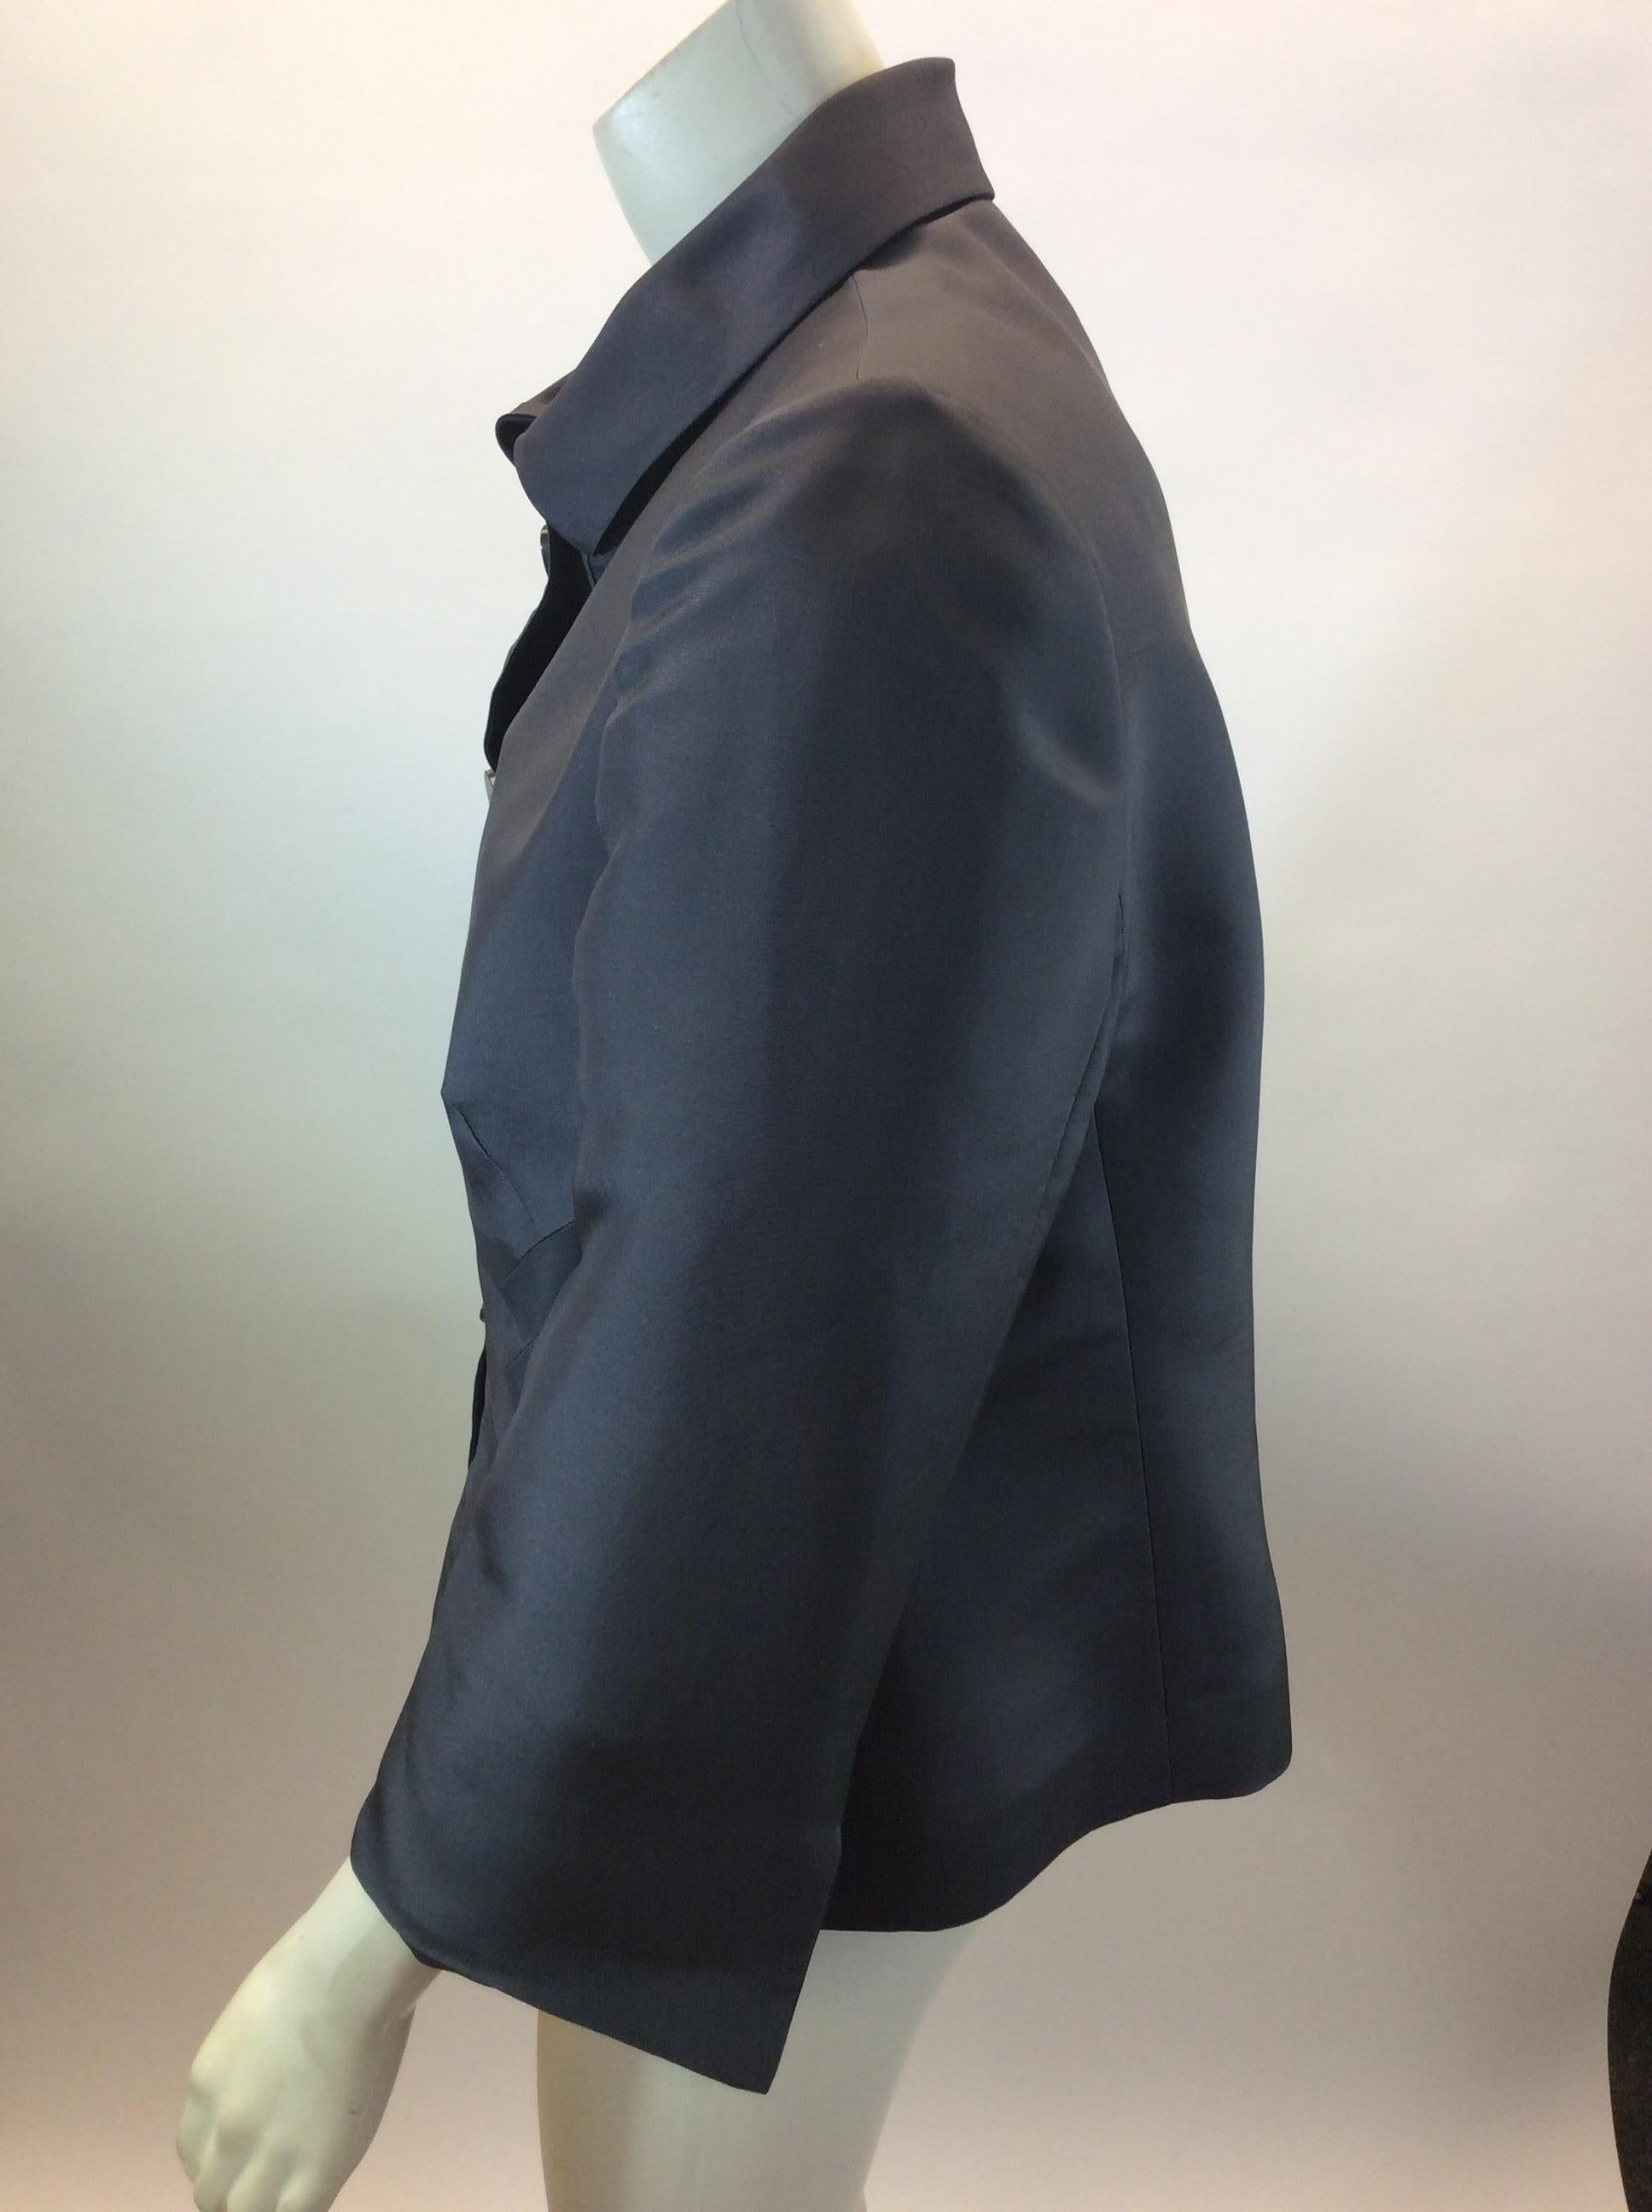 Armani Collezioni Grey Silk Jacket
$199
Made in China
100% Silk
Size 12
Length 21.5